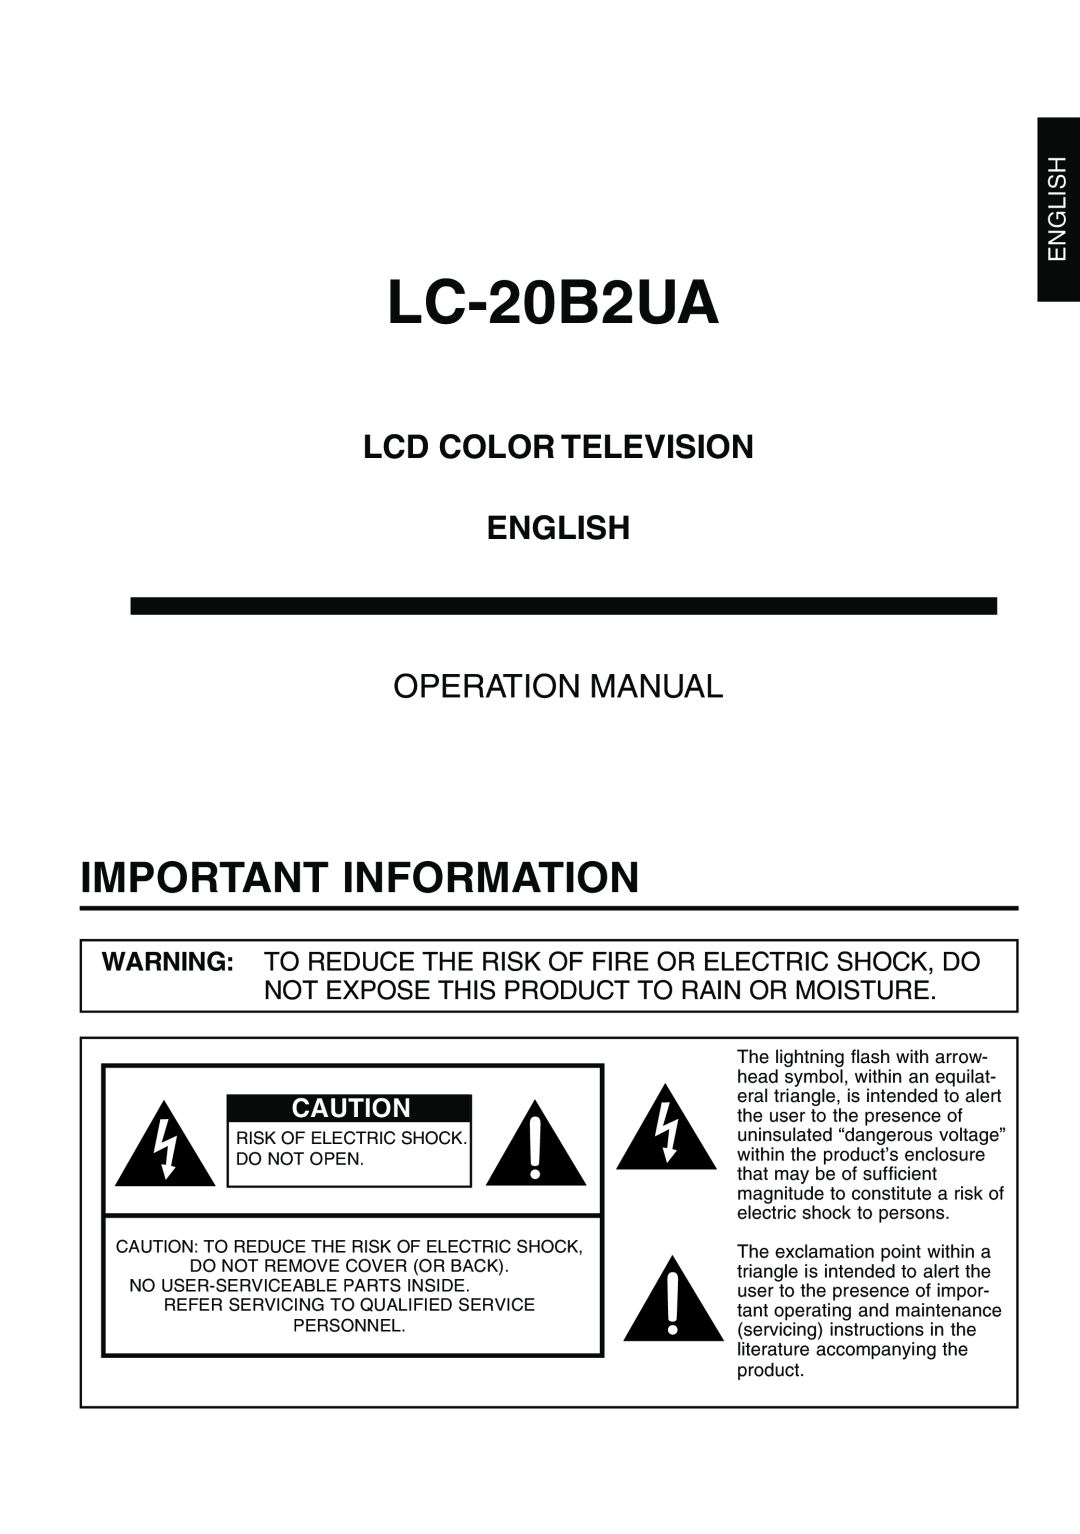 Sharp LC-20B2UA operation manual Important Information, Lcd Color Television English, Operation Manual 